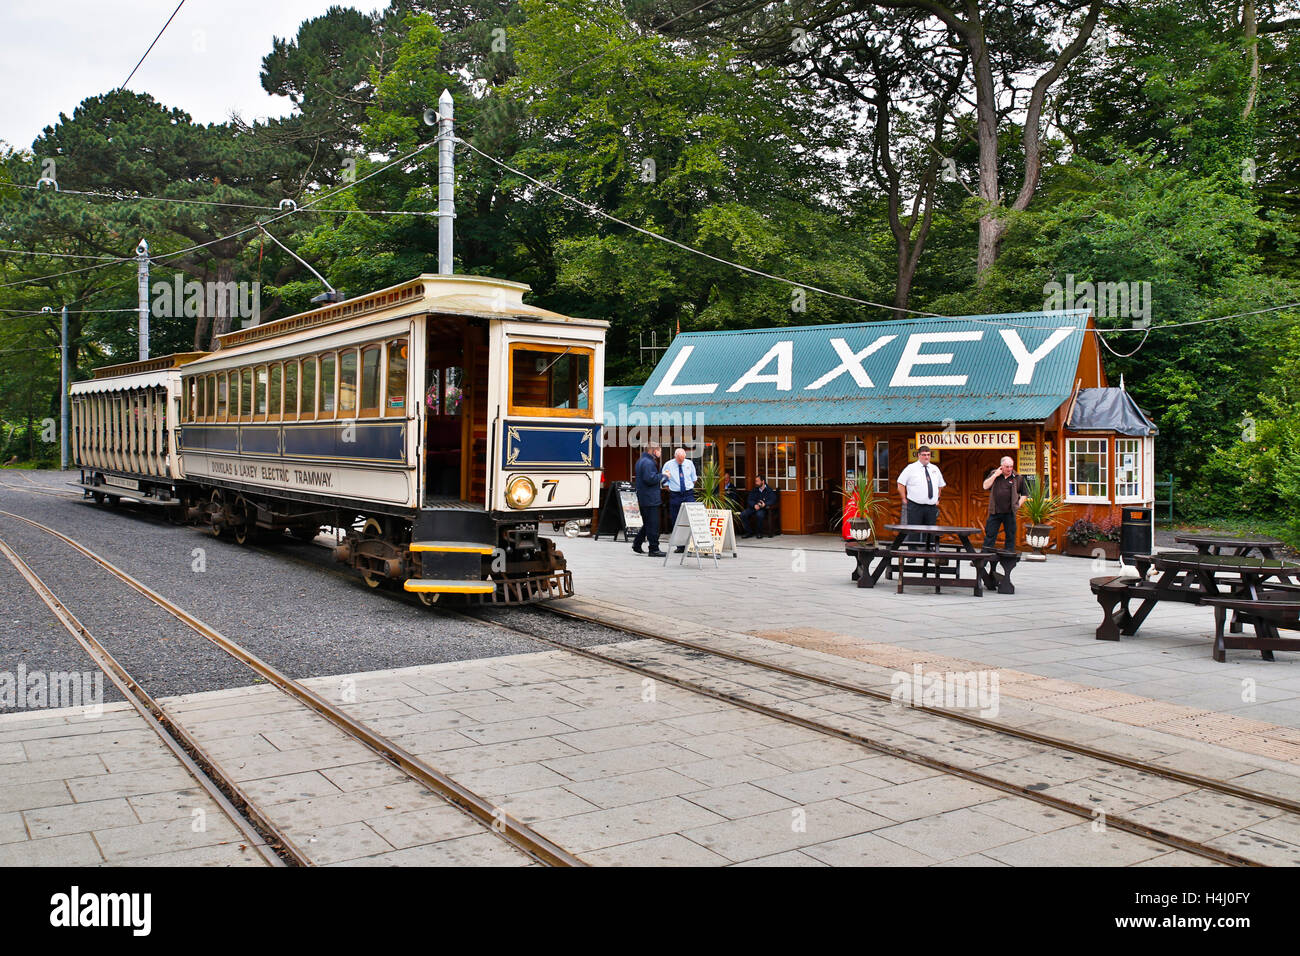 Laxey Electric Train Station; Isle of Man; UK Stock Photo